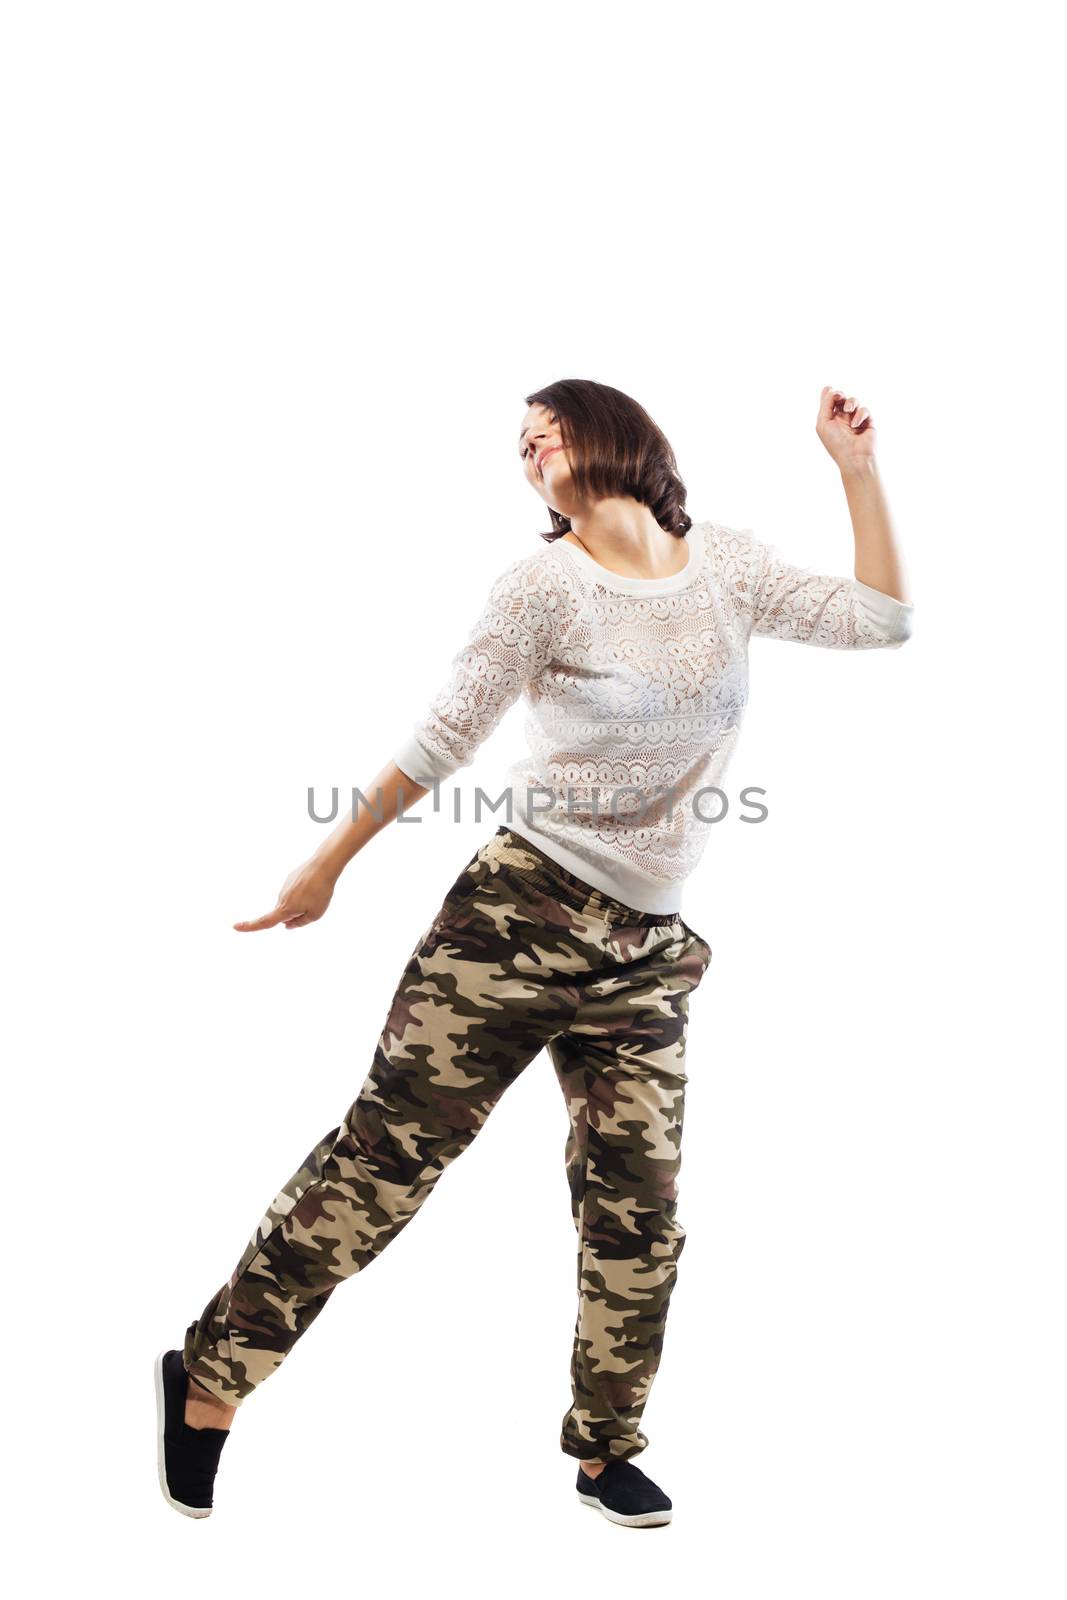 dancing girl in camouflage pants by kokimk